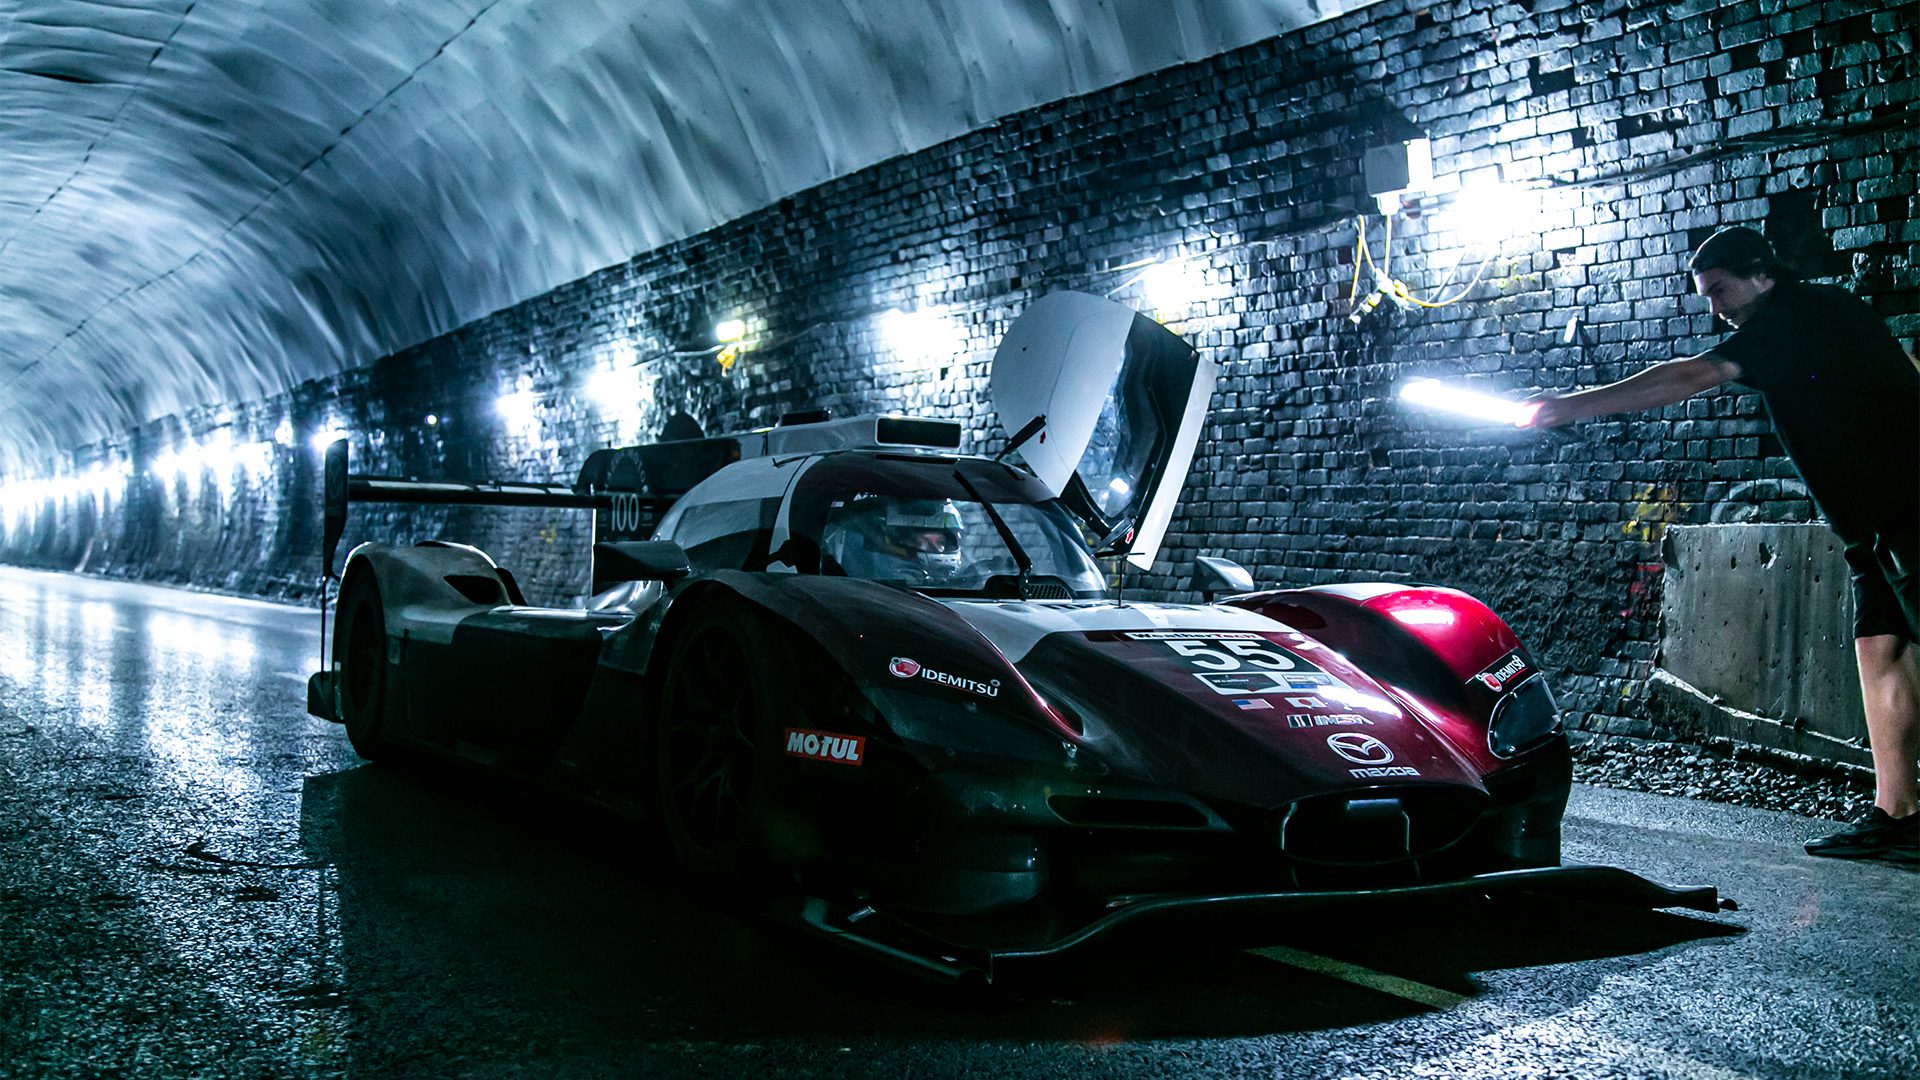 Multimatic Motorsport's benchmark Mazda DPi racecar undergoing aero testing at Catesby Tunnel